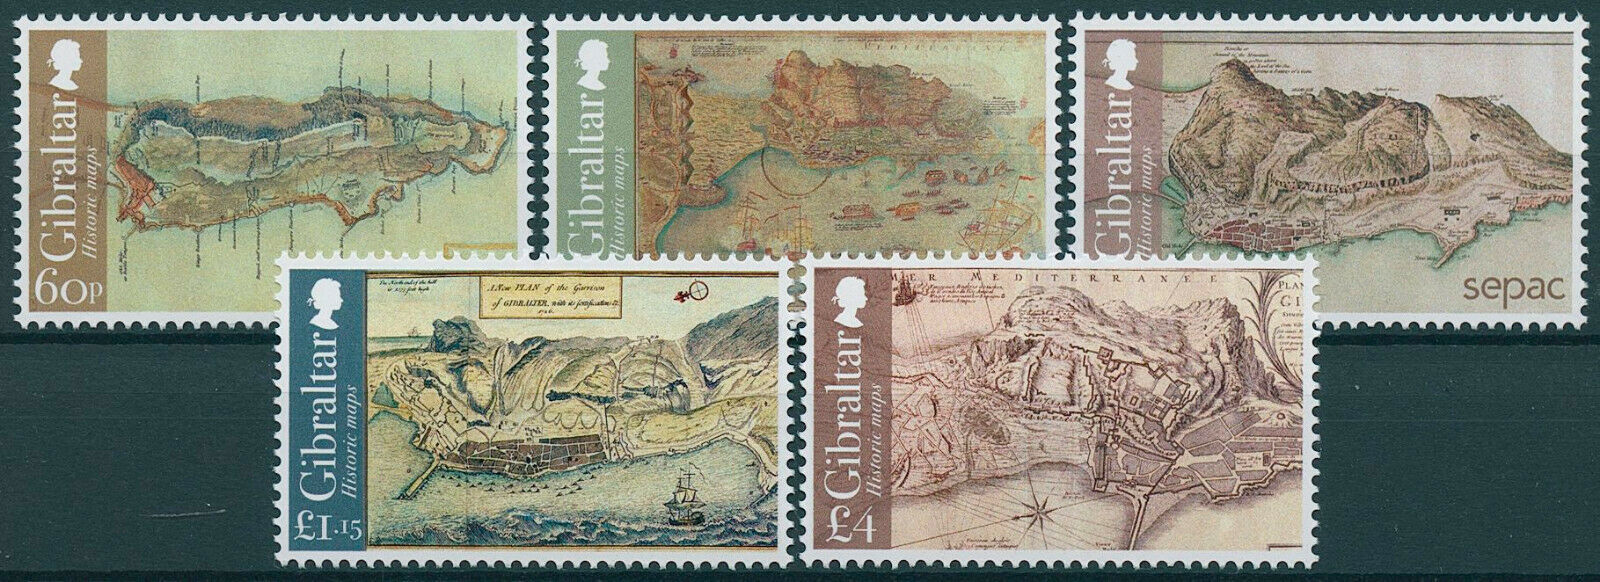 Gibraltar 2021 MNH Cartography Stamps Historic Maps SEPAC 5v Set